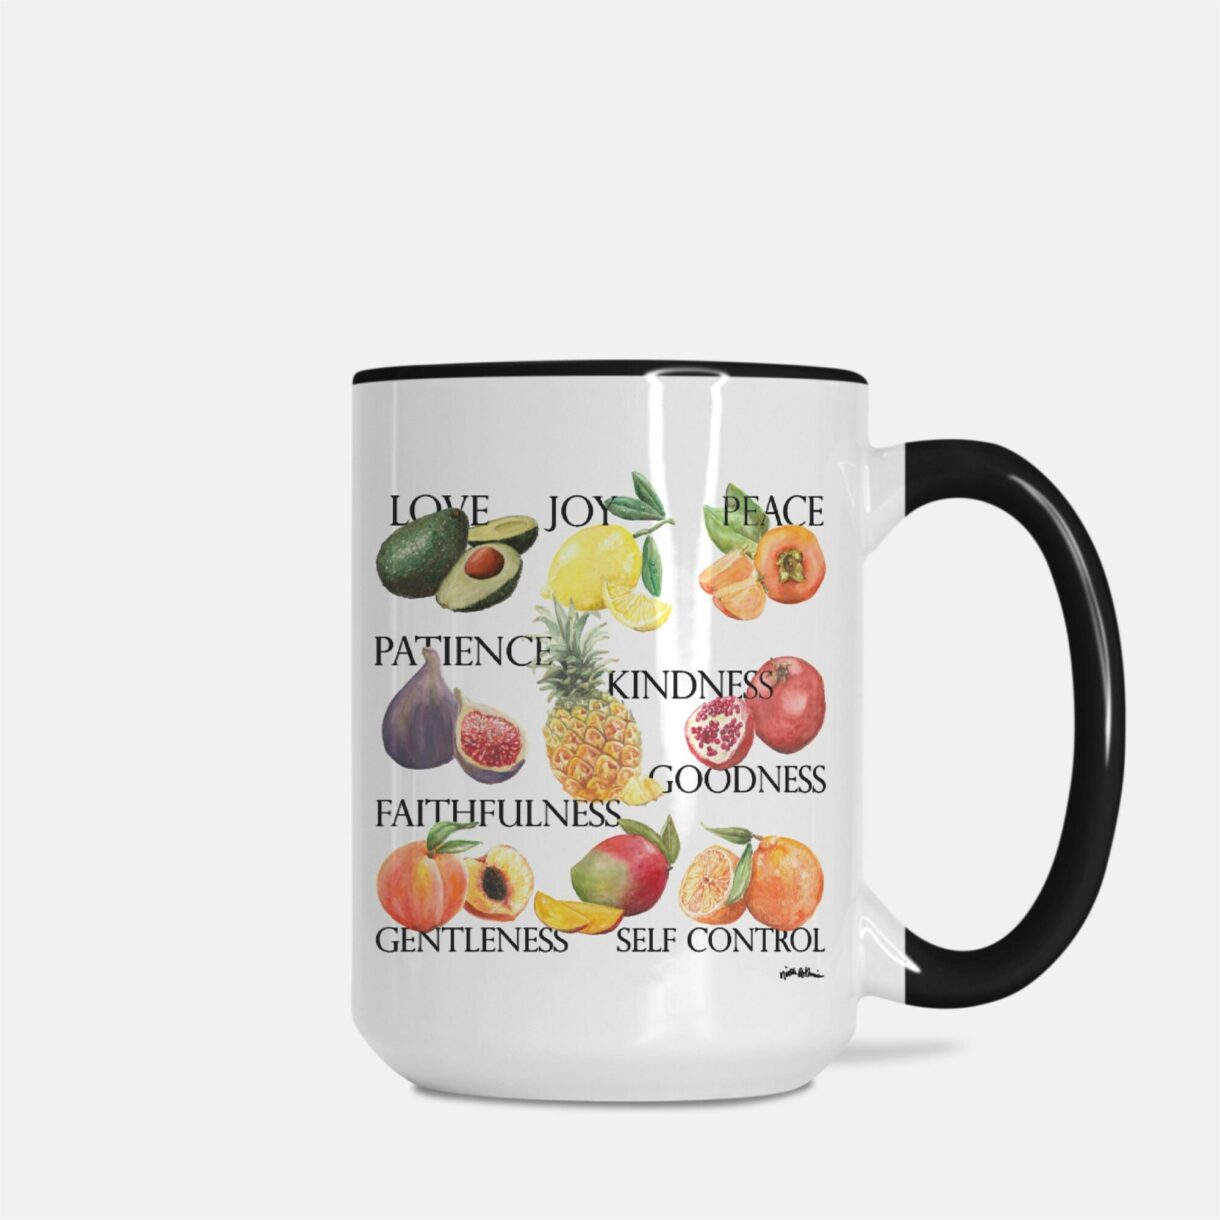 Fruit of the Spirit mug, 15 oz